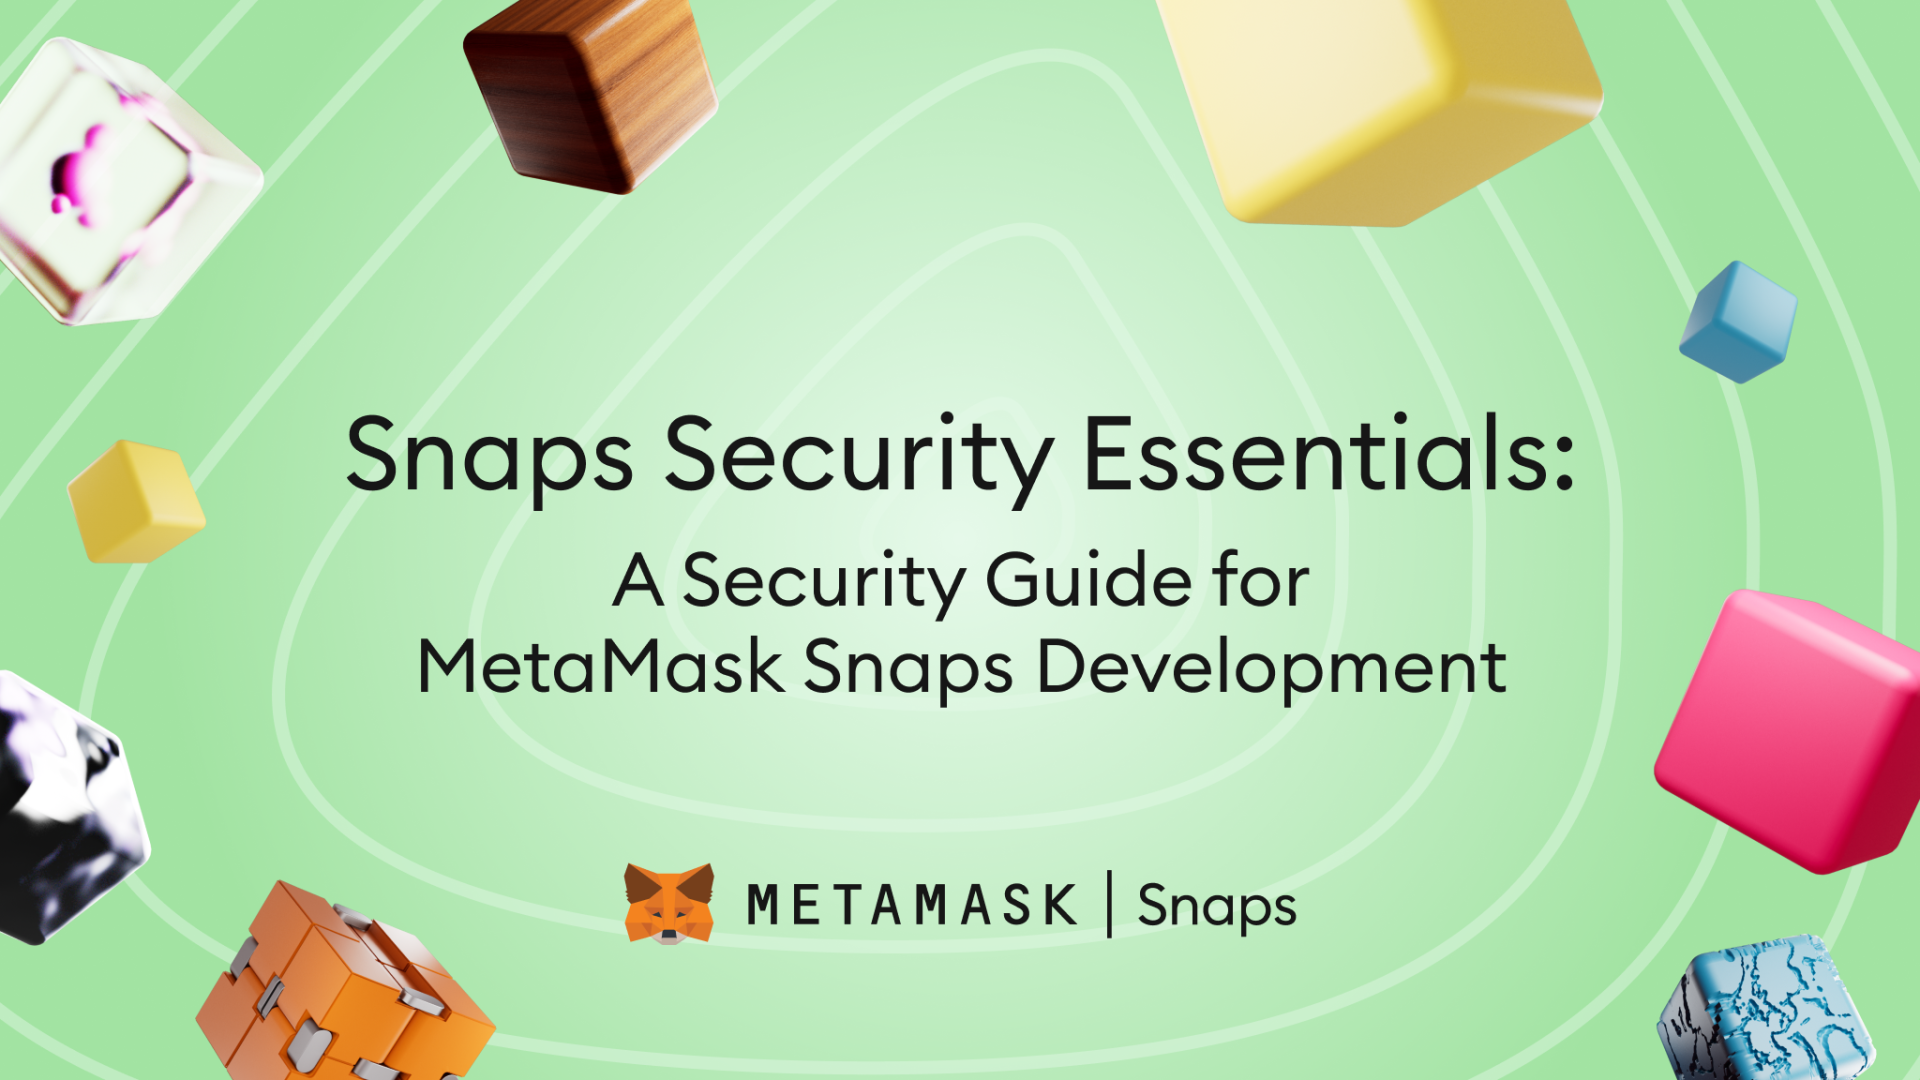 MetaMask Snaps Security Essentials image